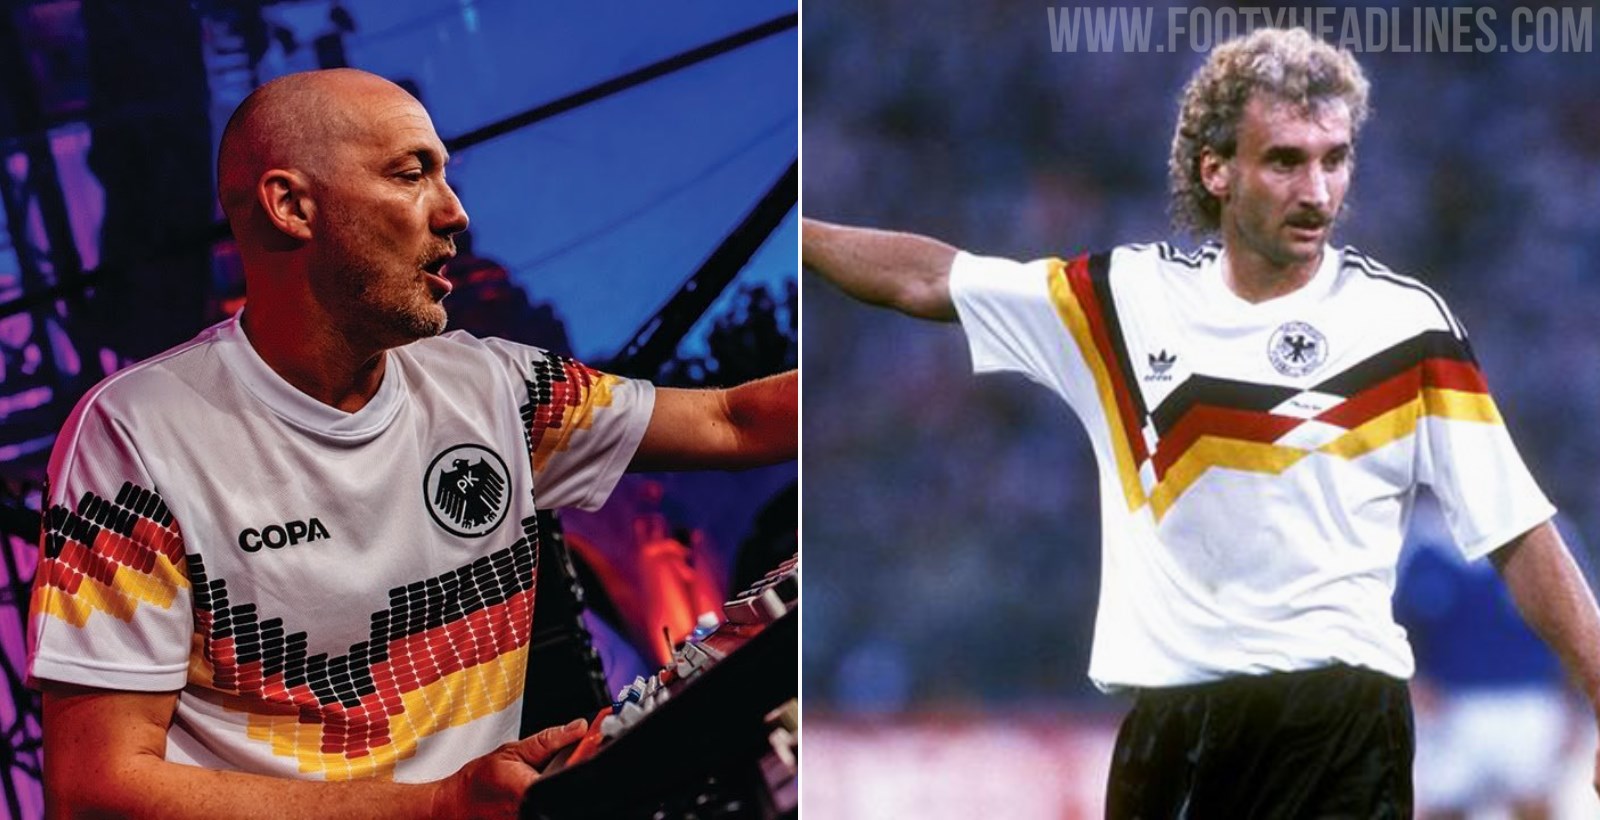 Agregar Pigmalión Identidad Copa x Paul Kalkbrenner Germany Remake Kit Released - Tribute to Italia 90  Shirt - Footy Headlines